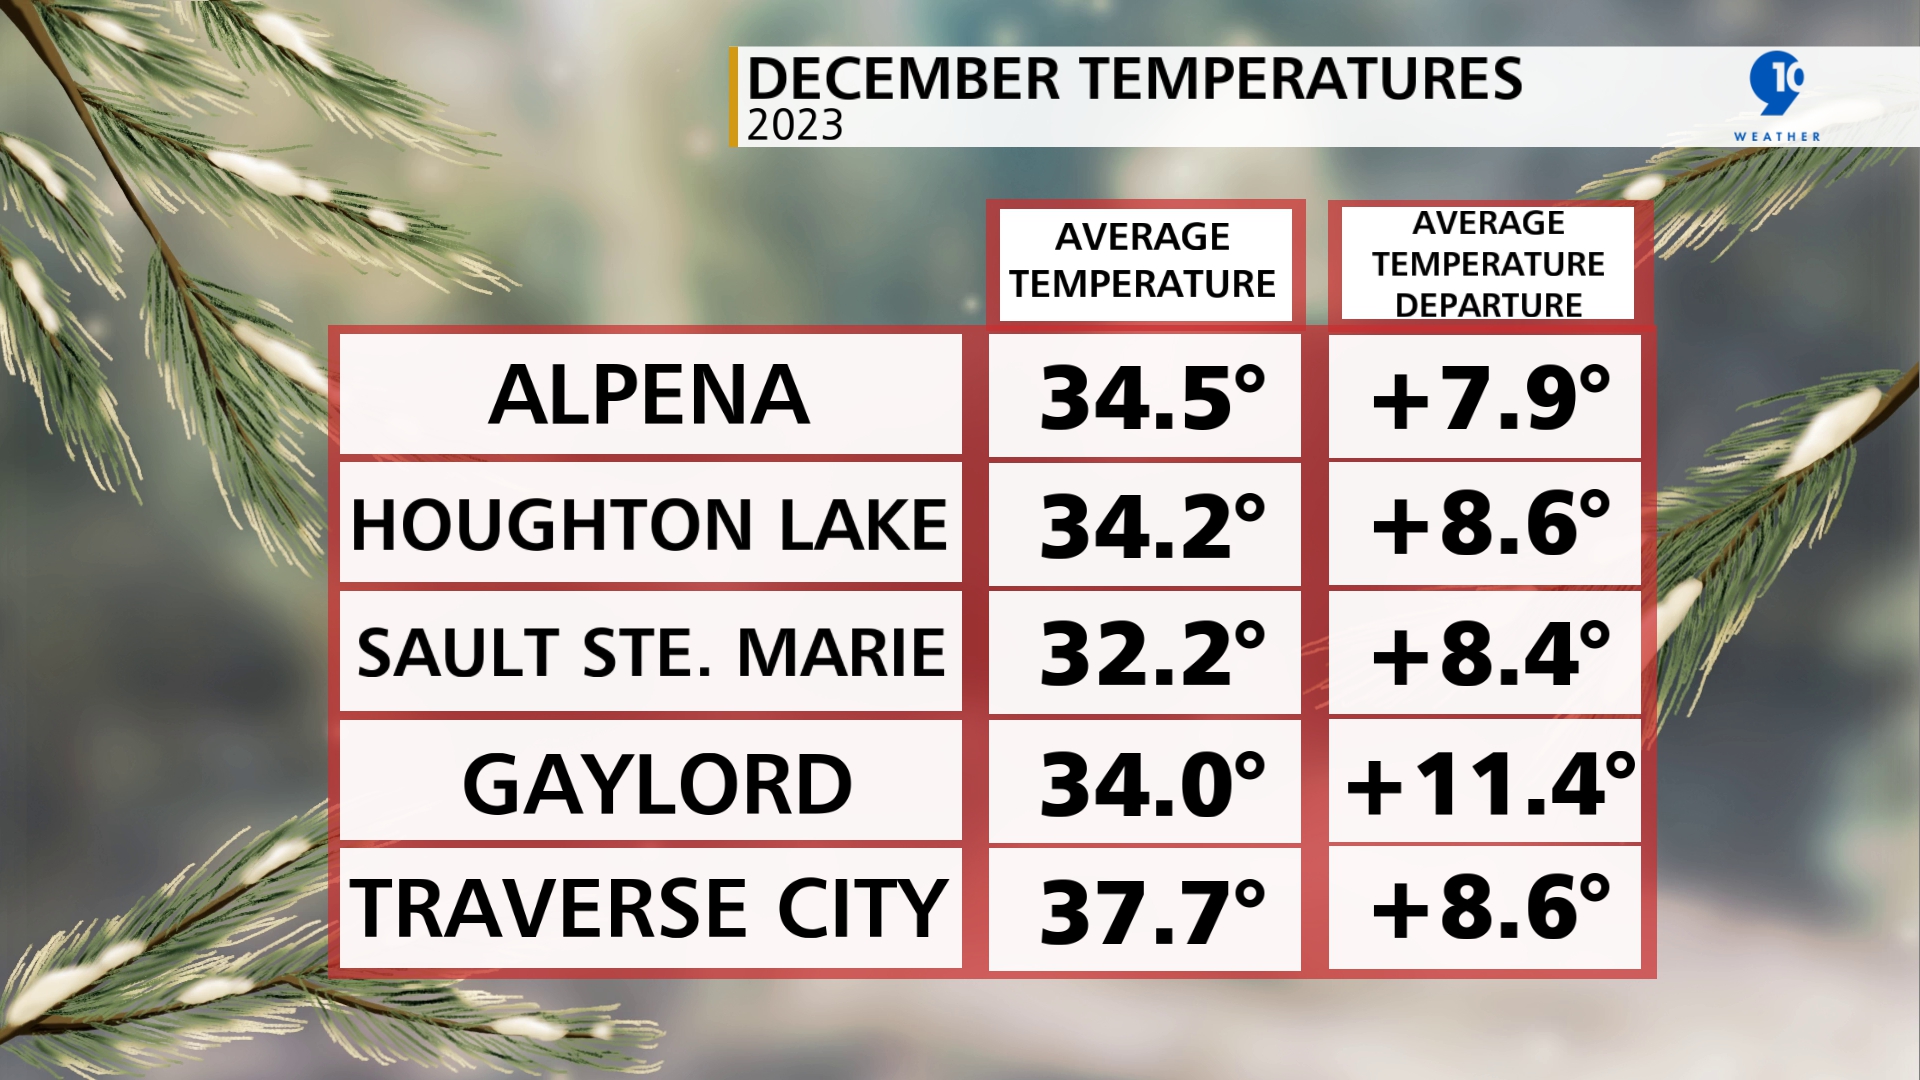 Average Temperatures and Average Temperature Departures for December of 2023